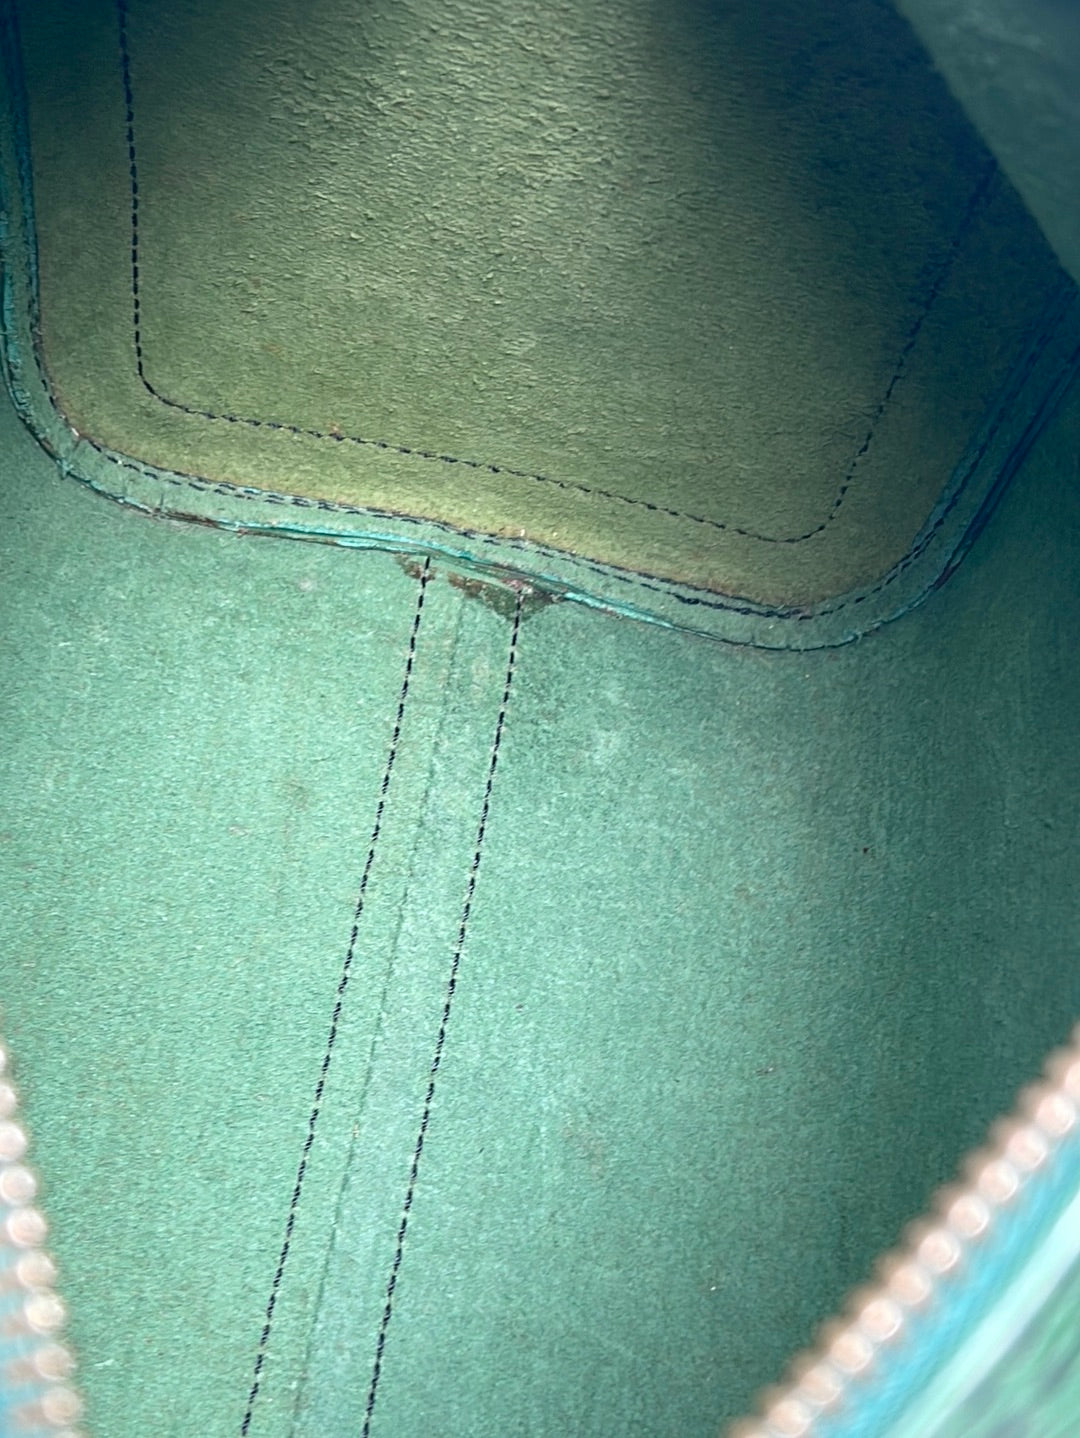 Speedy leather handbag Louis Vuitton Green in Leather - 34225222